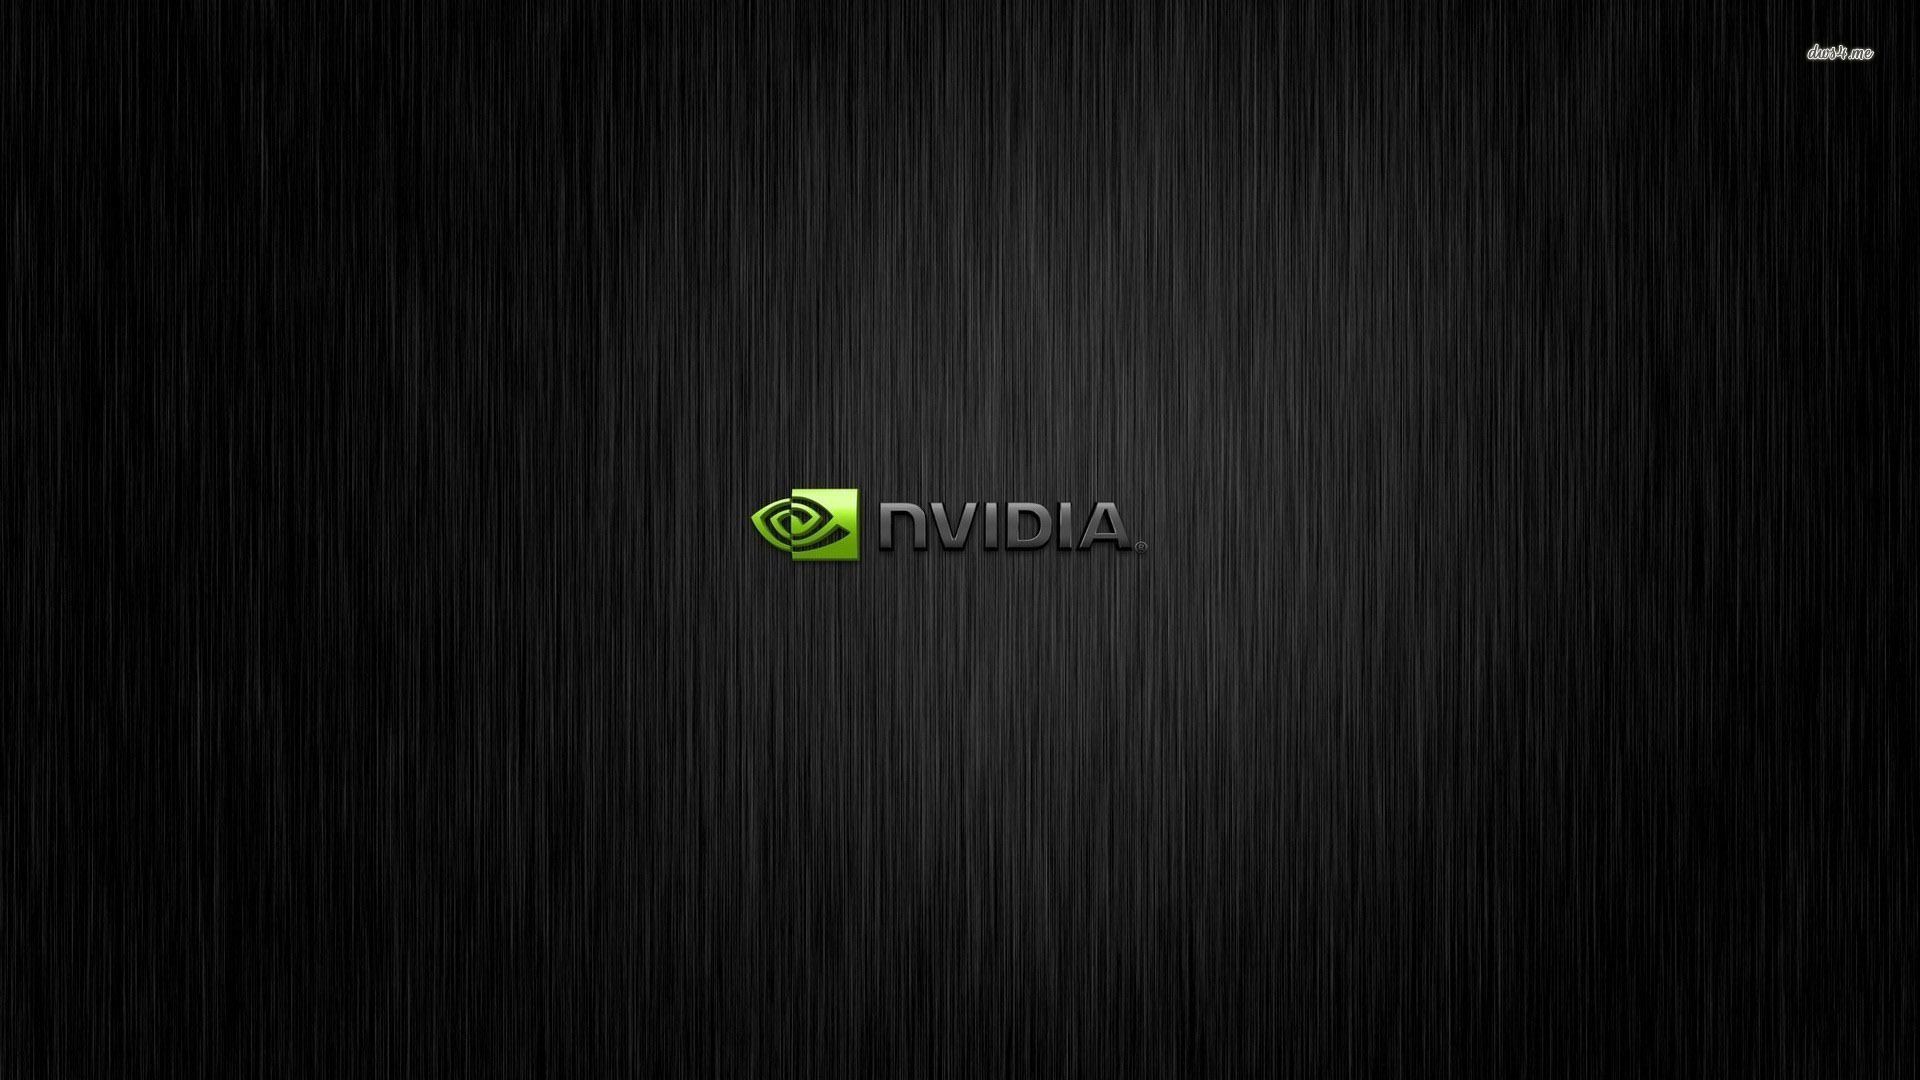 Nvidia wallpaper - Computer wallpapers